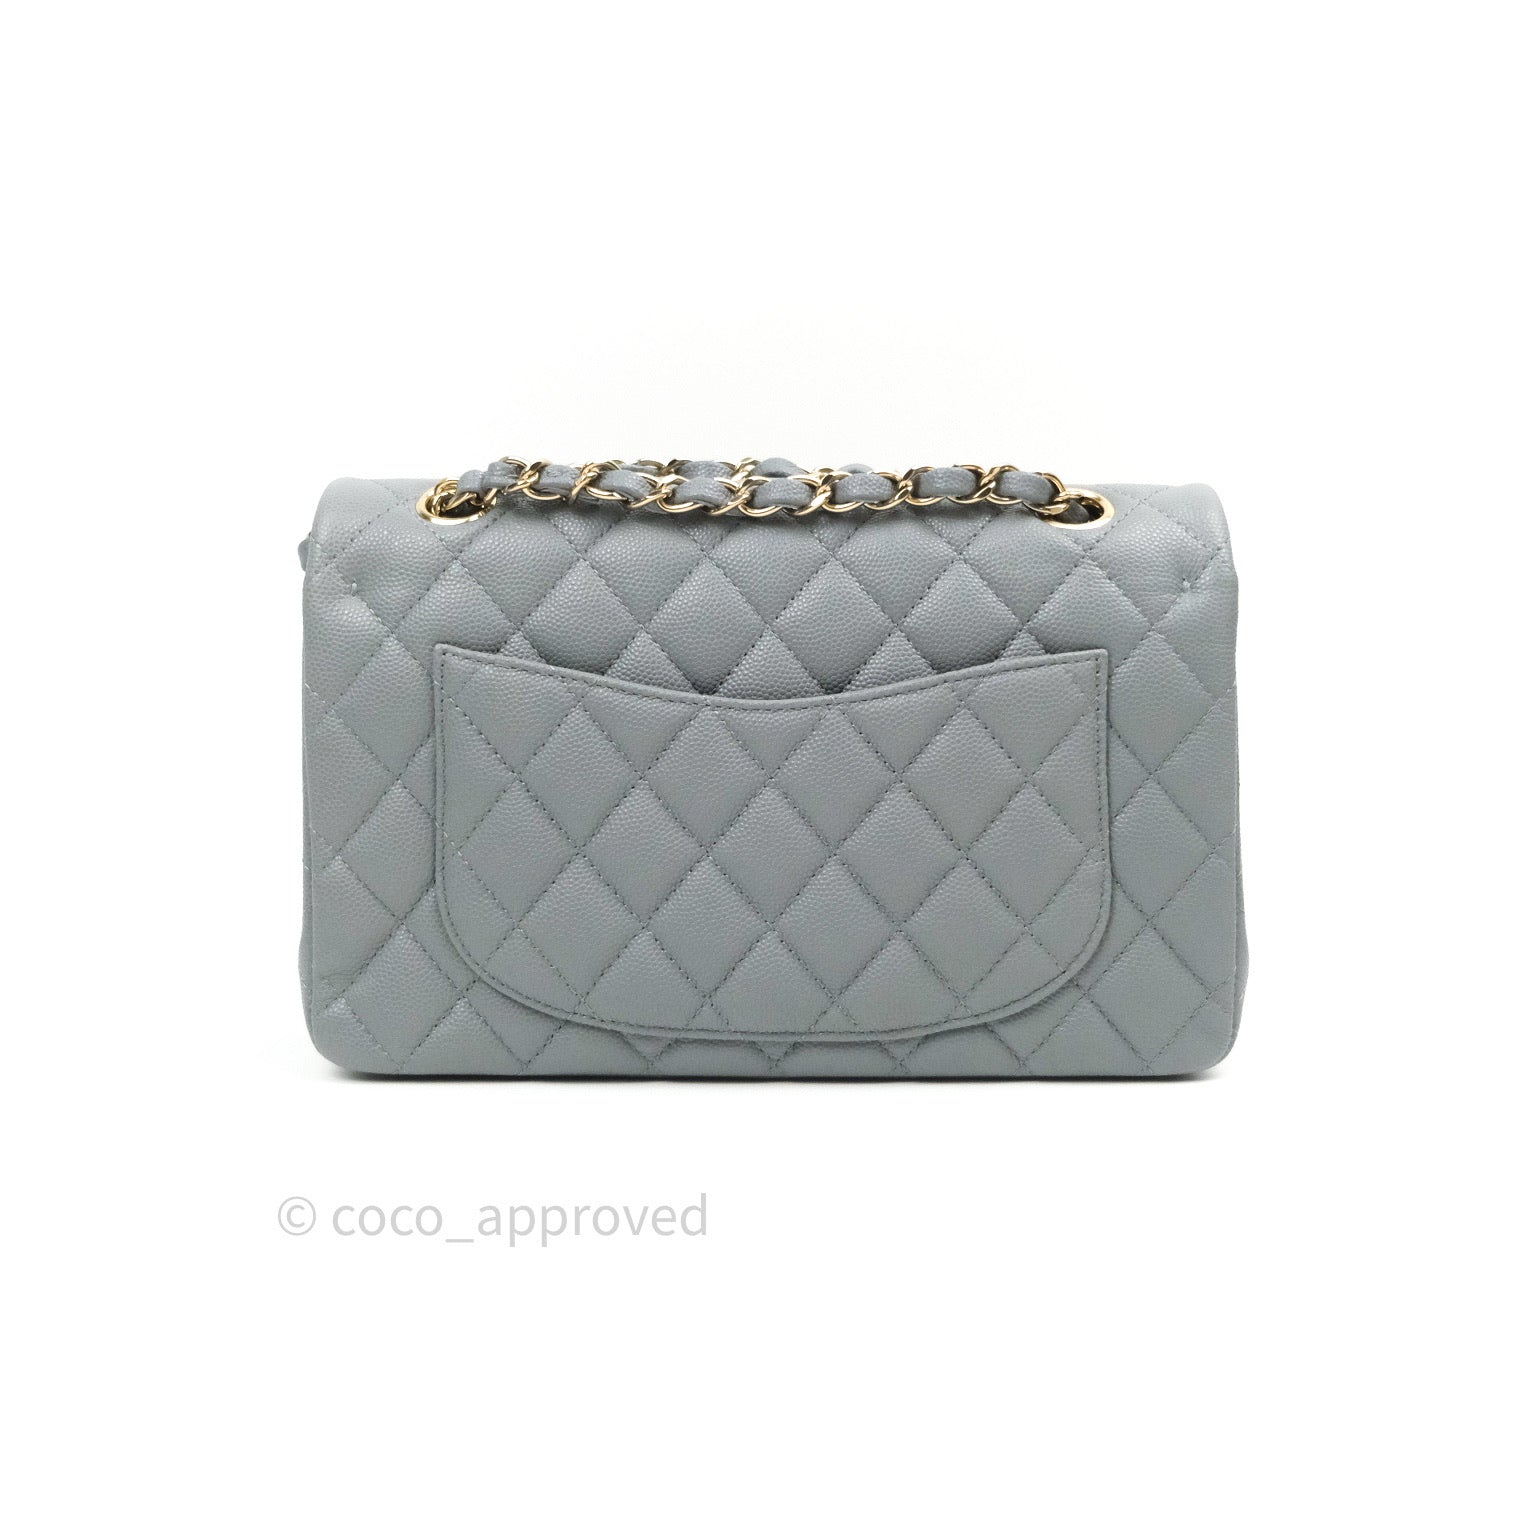 Chanel - New 22a Classic Medium Double Flap Dark Grey Cc Shoulder